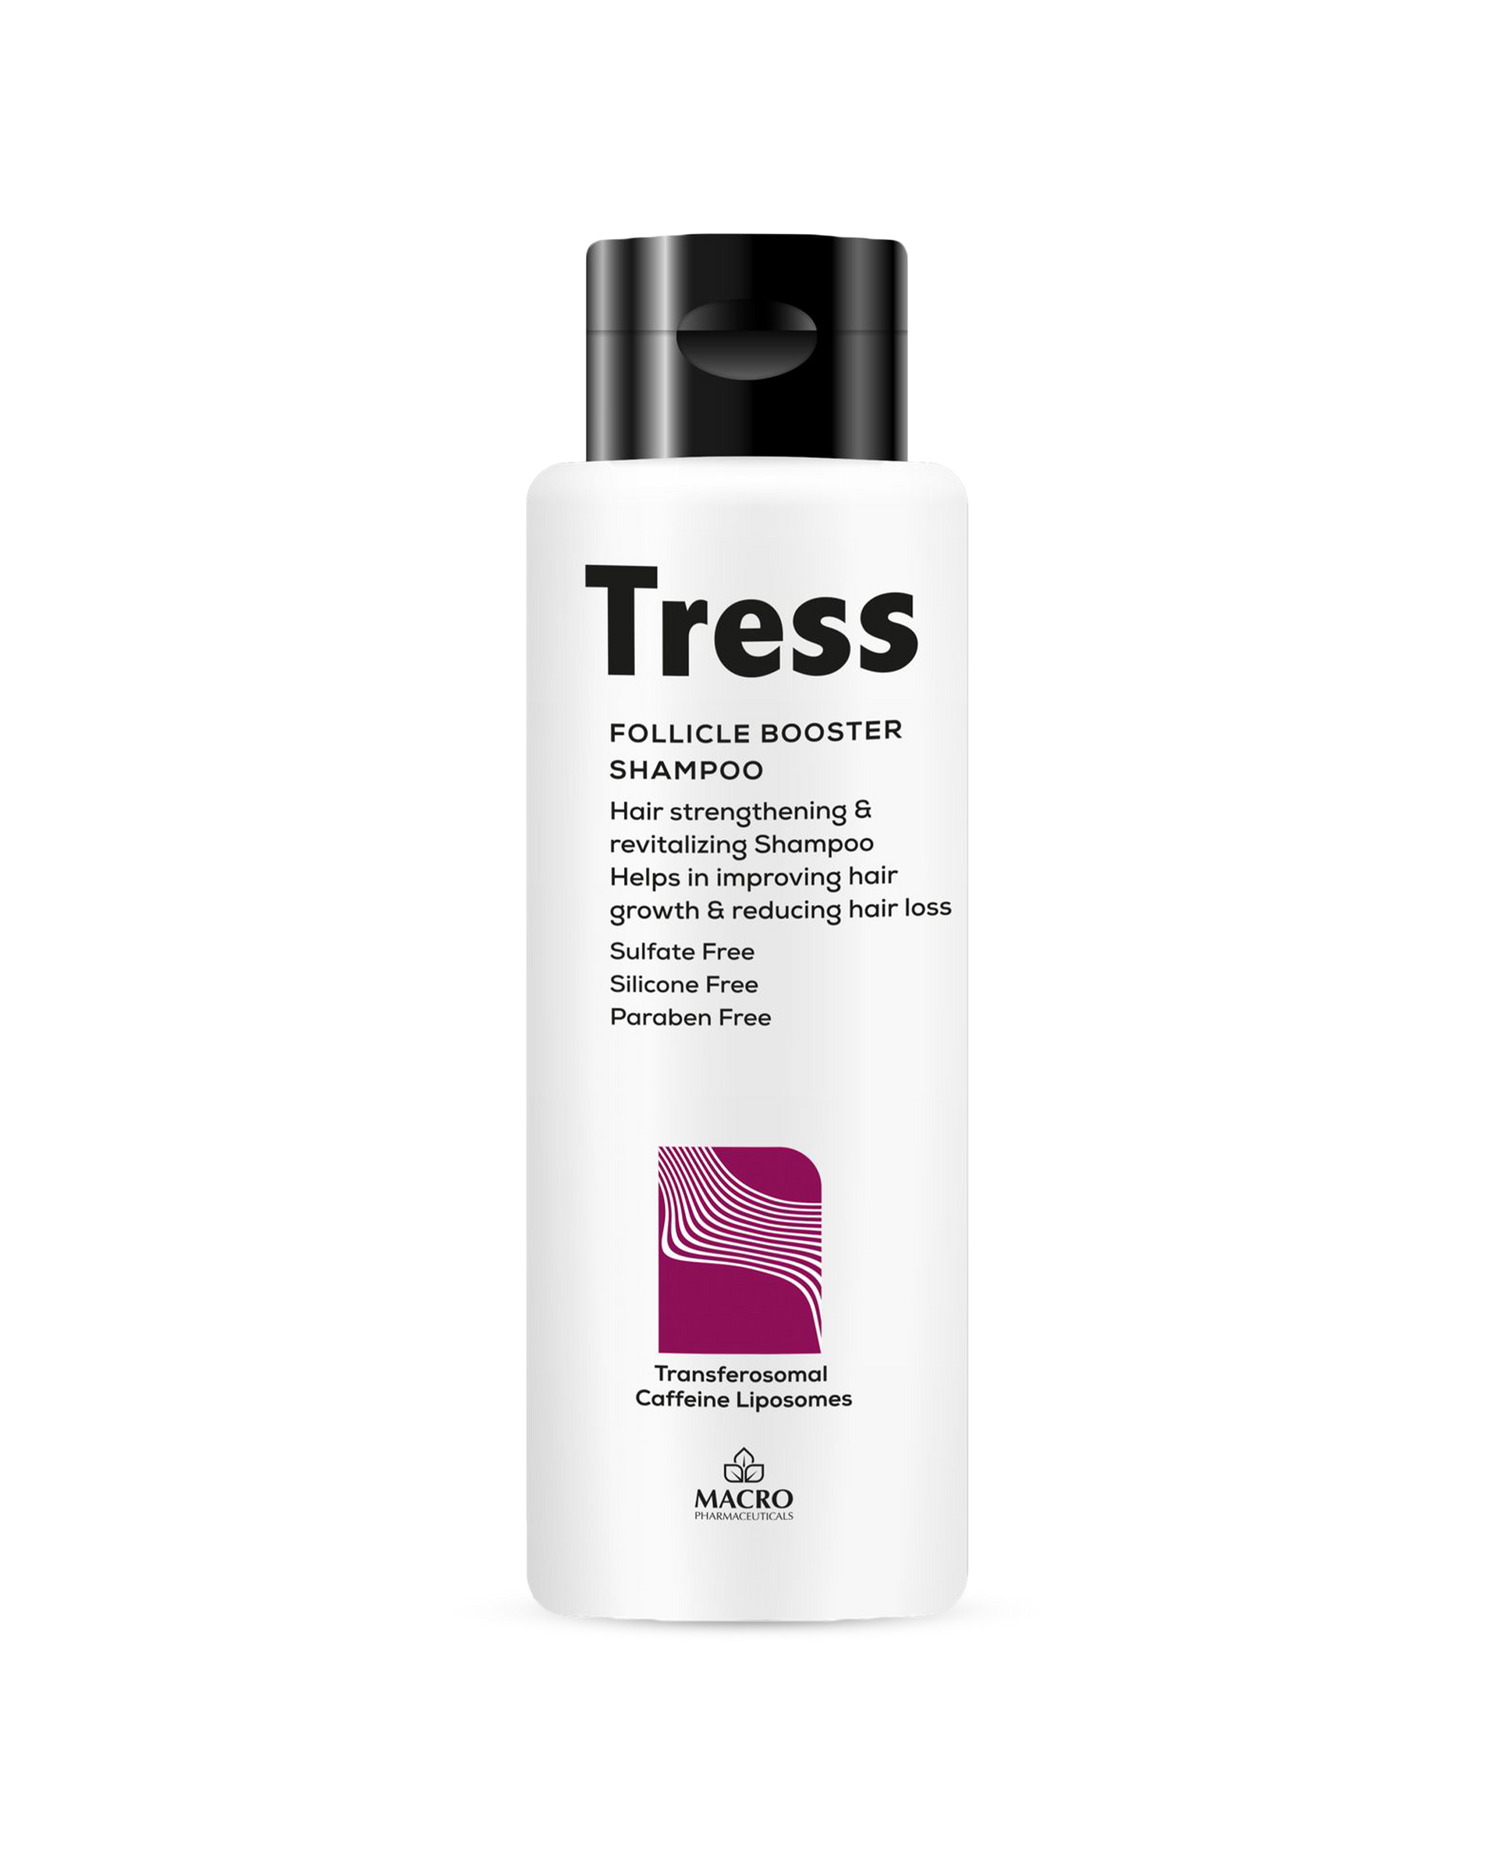 Tress Follicle Booster Shampoo